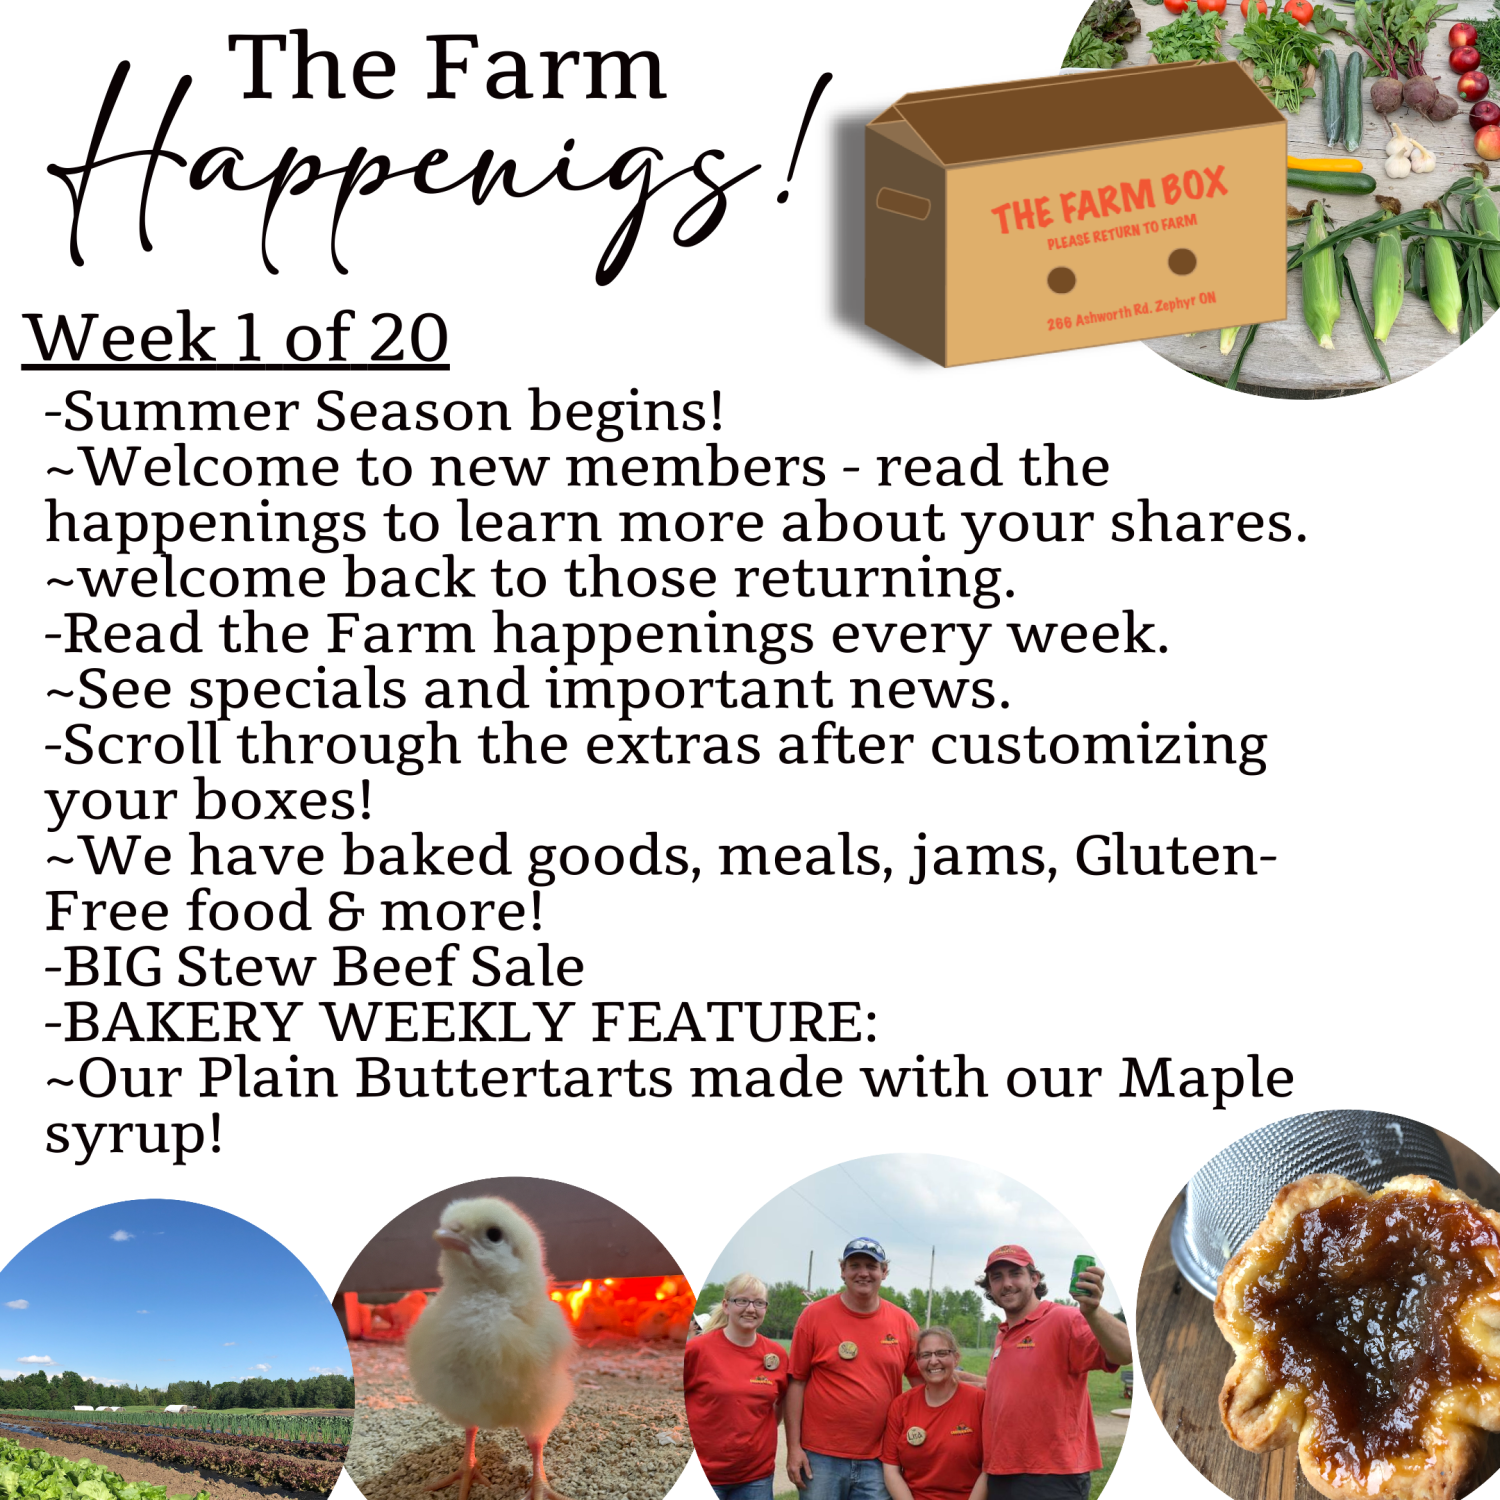 Next Happening: "The Farm Box"-Coopers CSA Farm Farm Happenings: Week 1 of 20